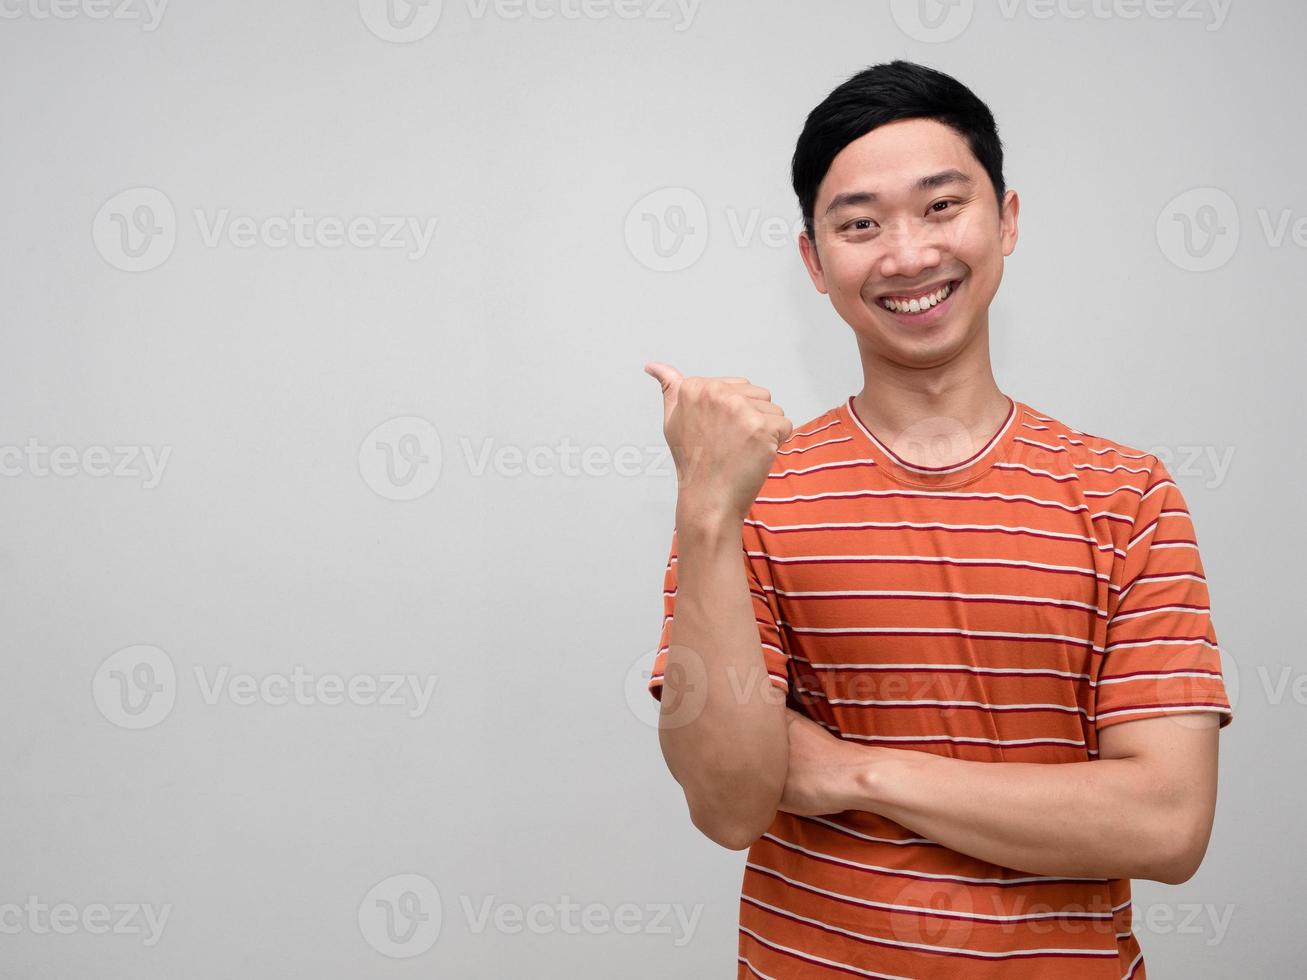 positivo ásia homem laranja listrado camisa sorrir cruzando braços isolado foto